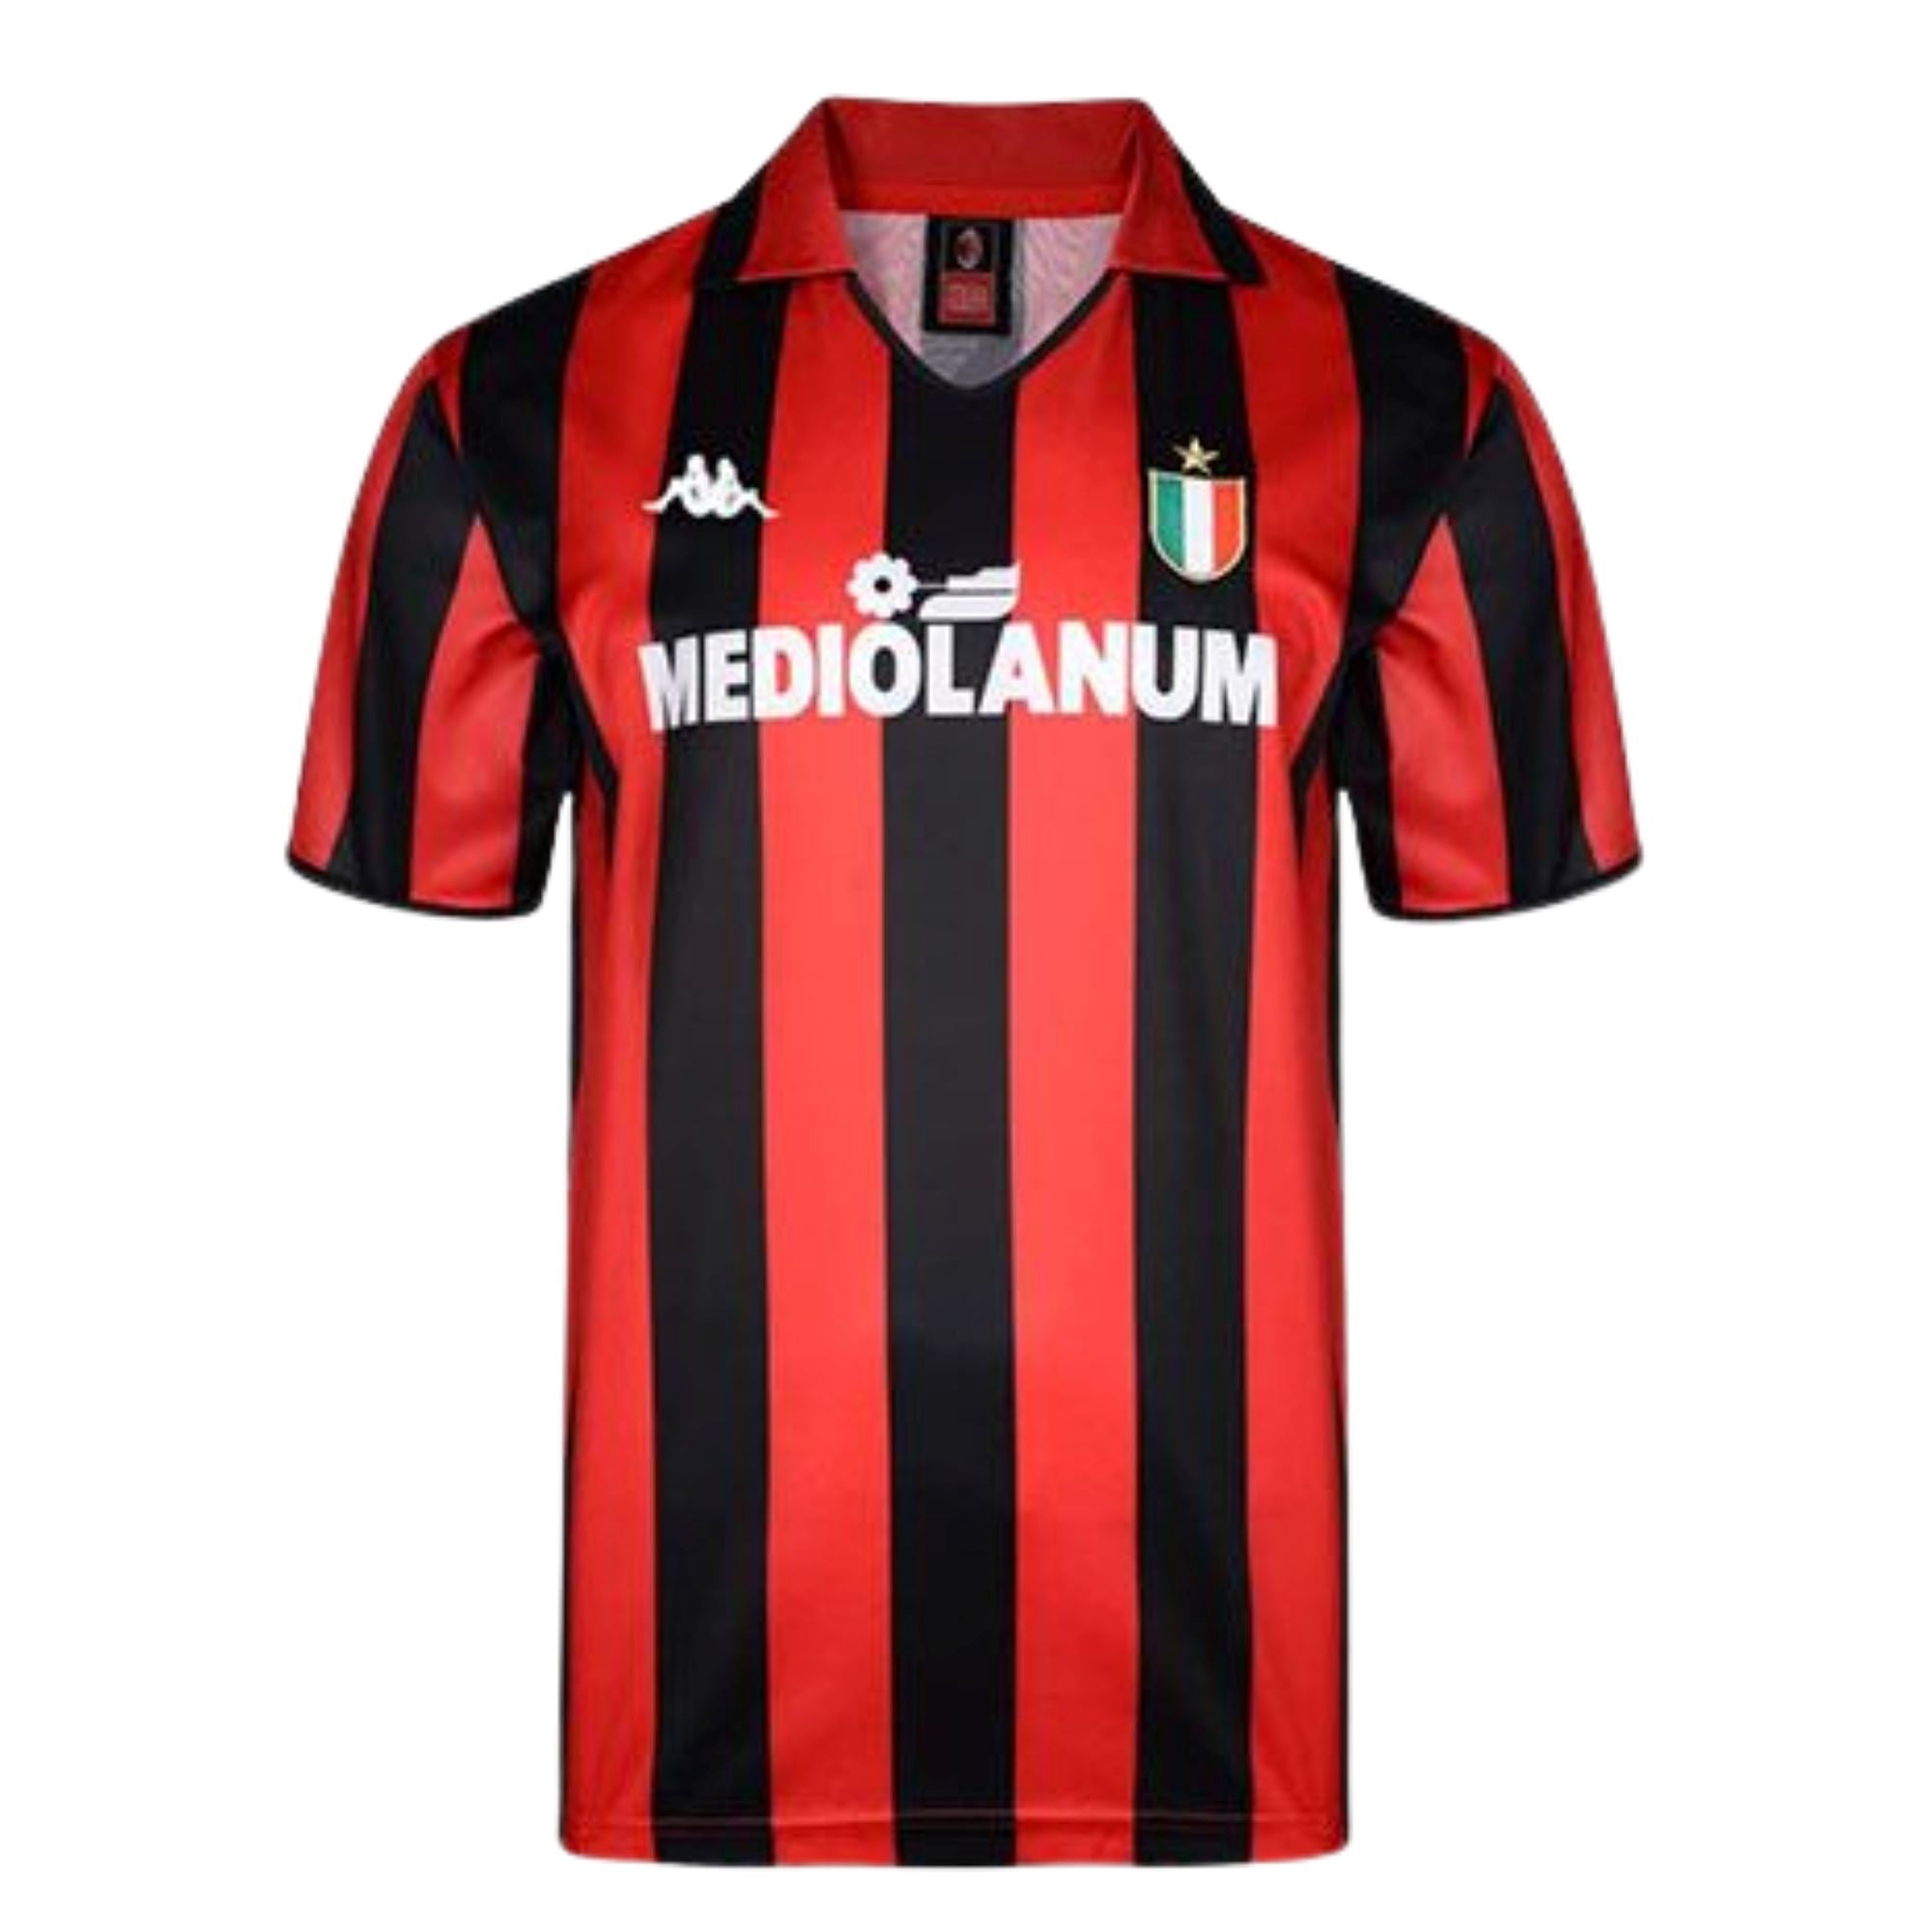 Inter Milan retro soccer jersey 1989